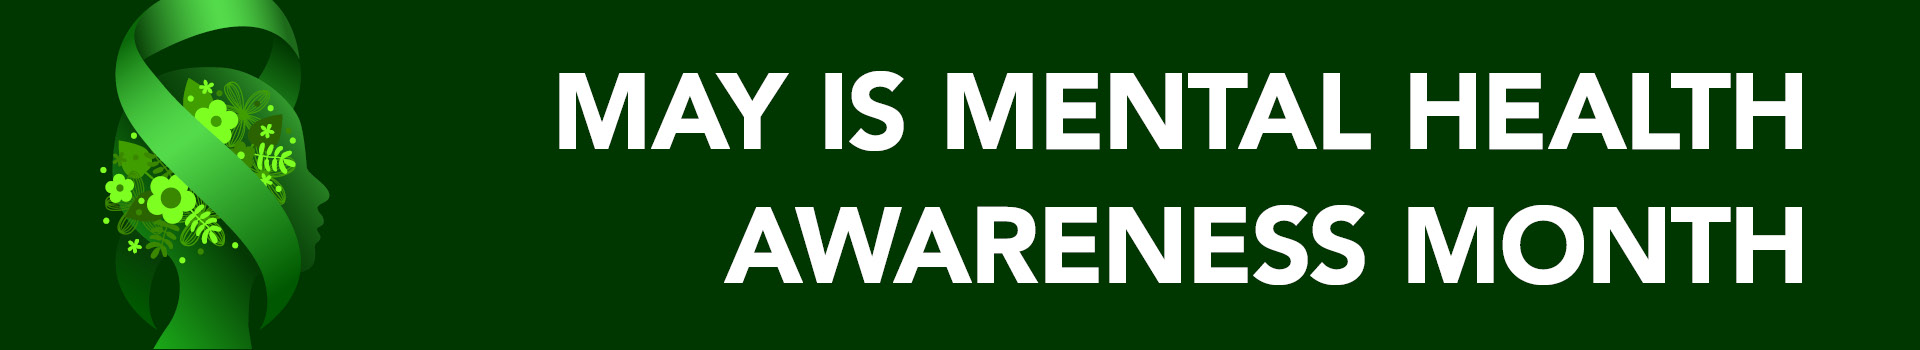 24-1339309219 Mental Health Awareness Month 050124 1920x350